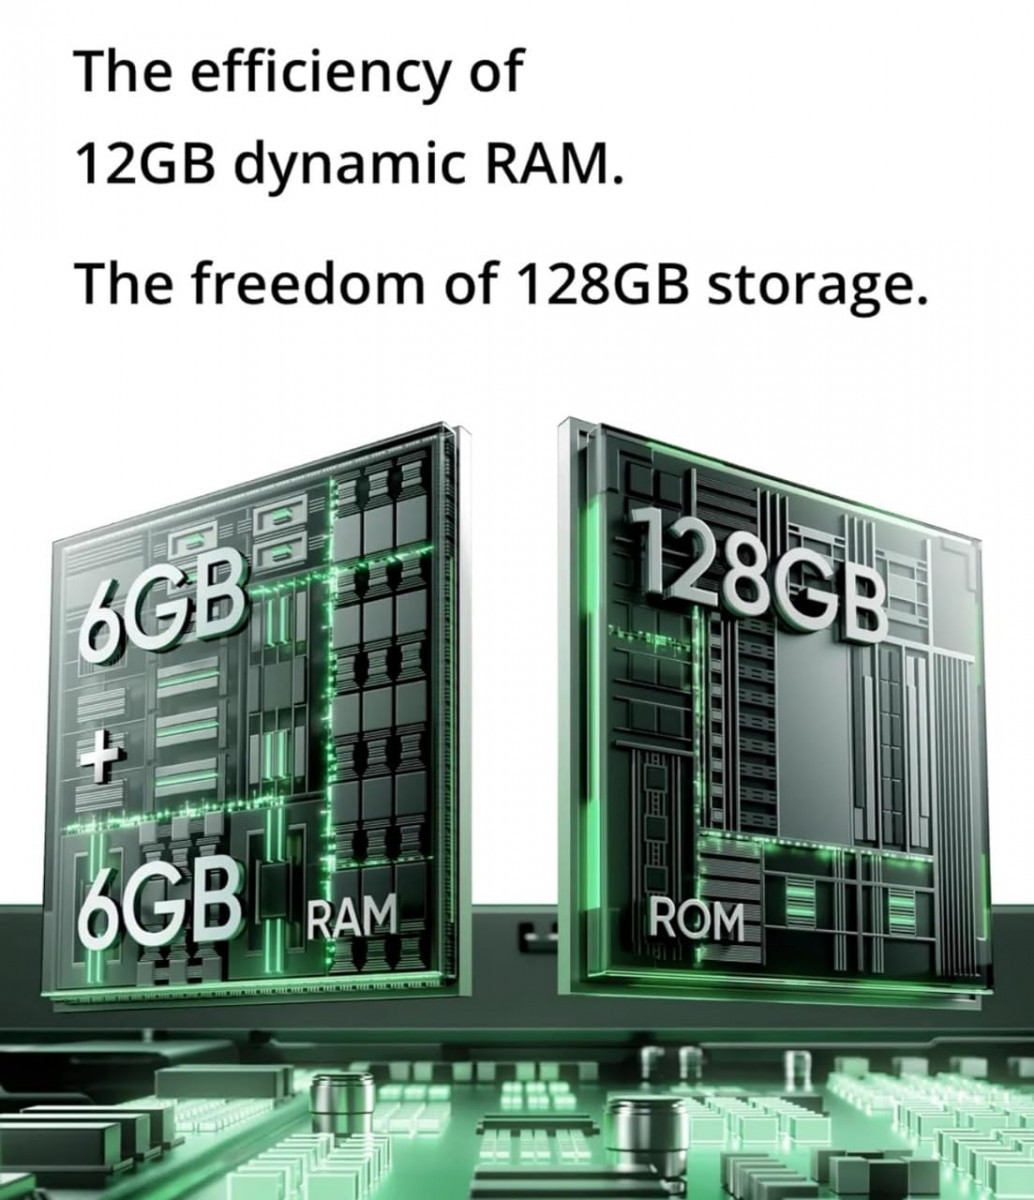 realme C65 5G Feather Green 128 GB 6 GB RAM